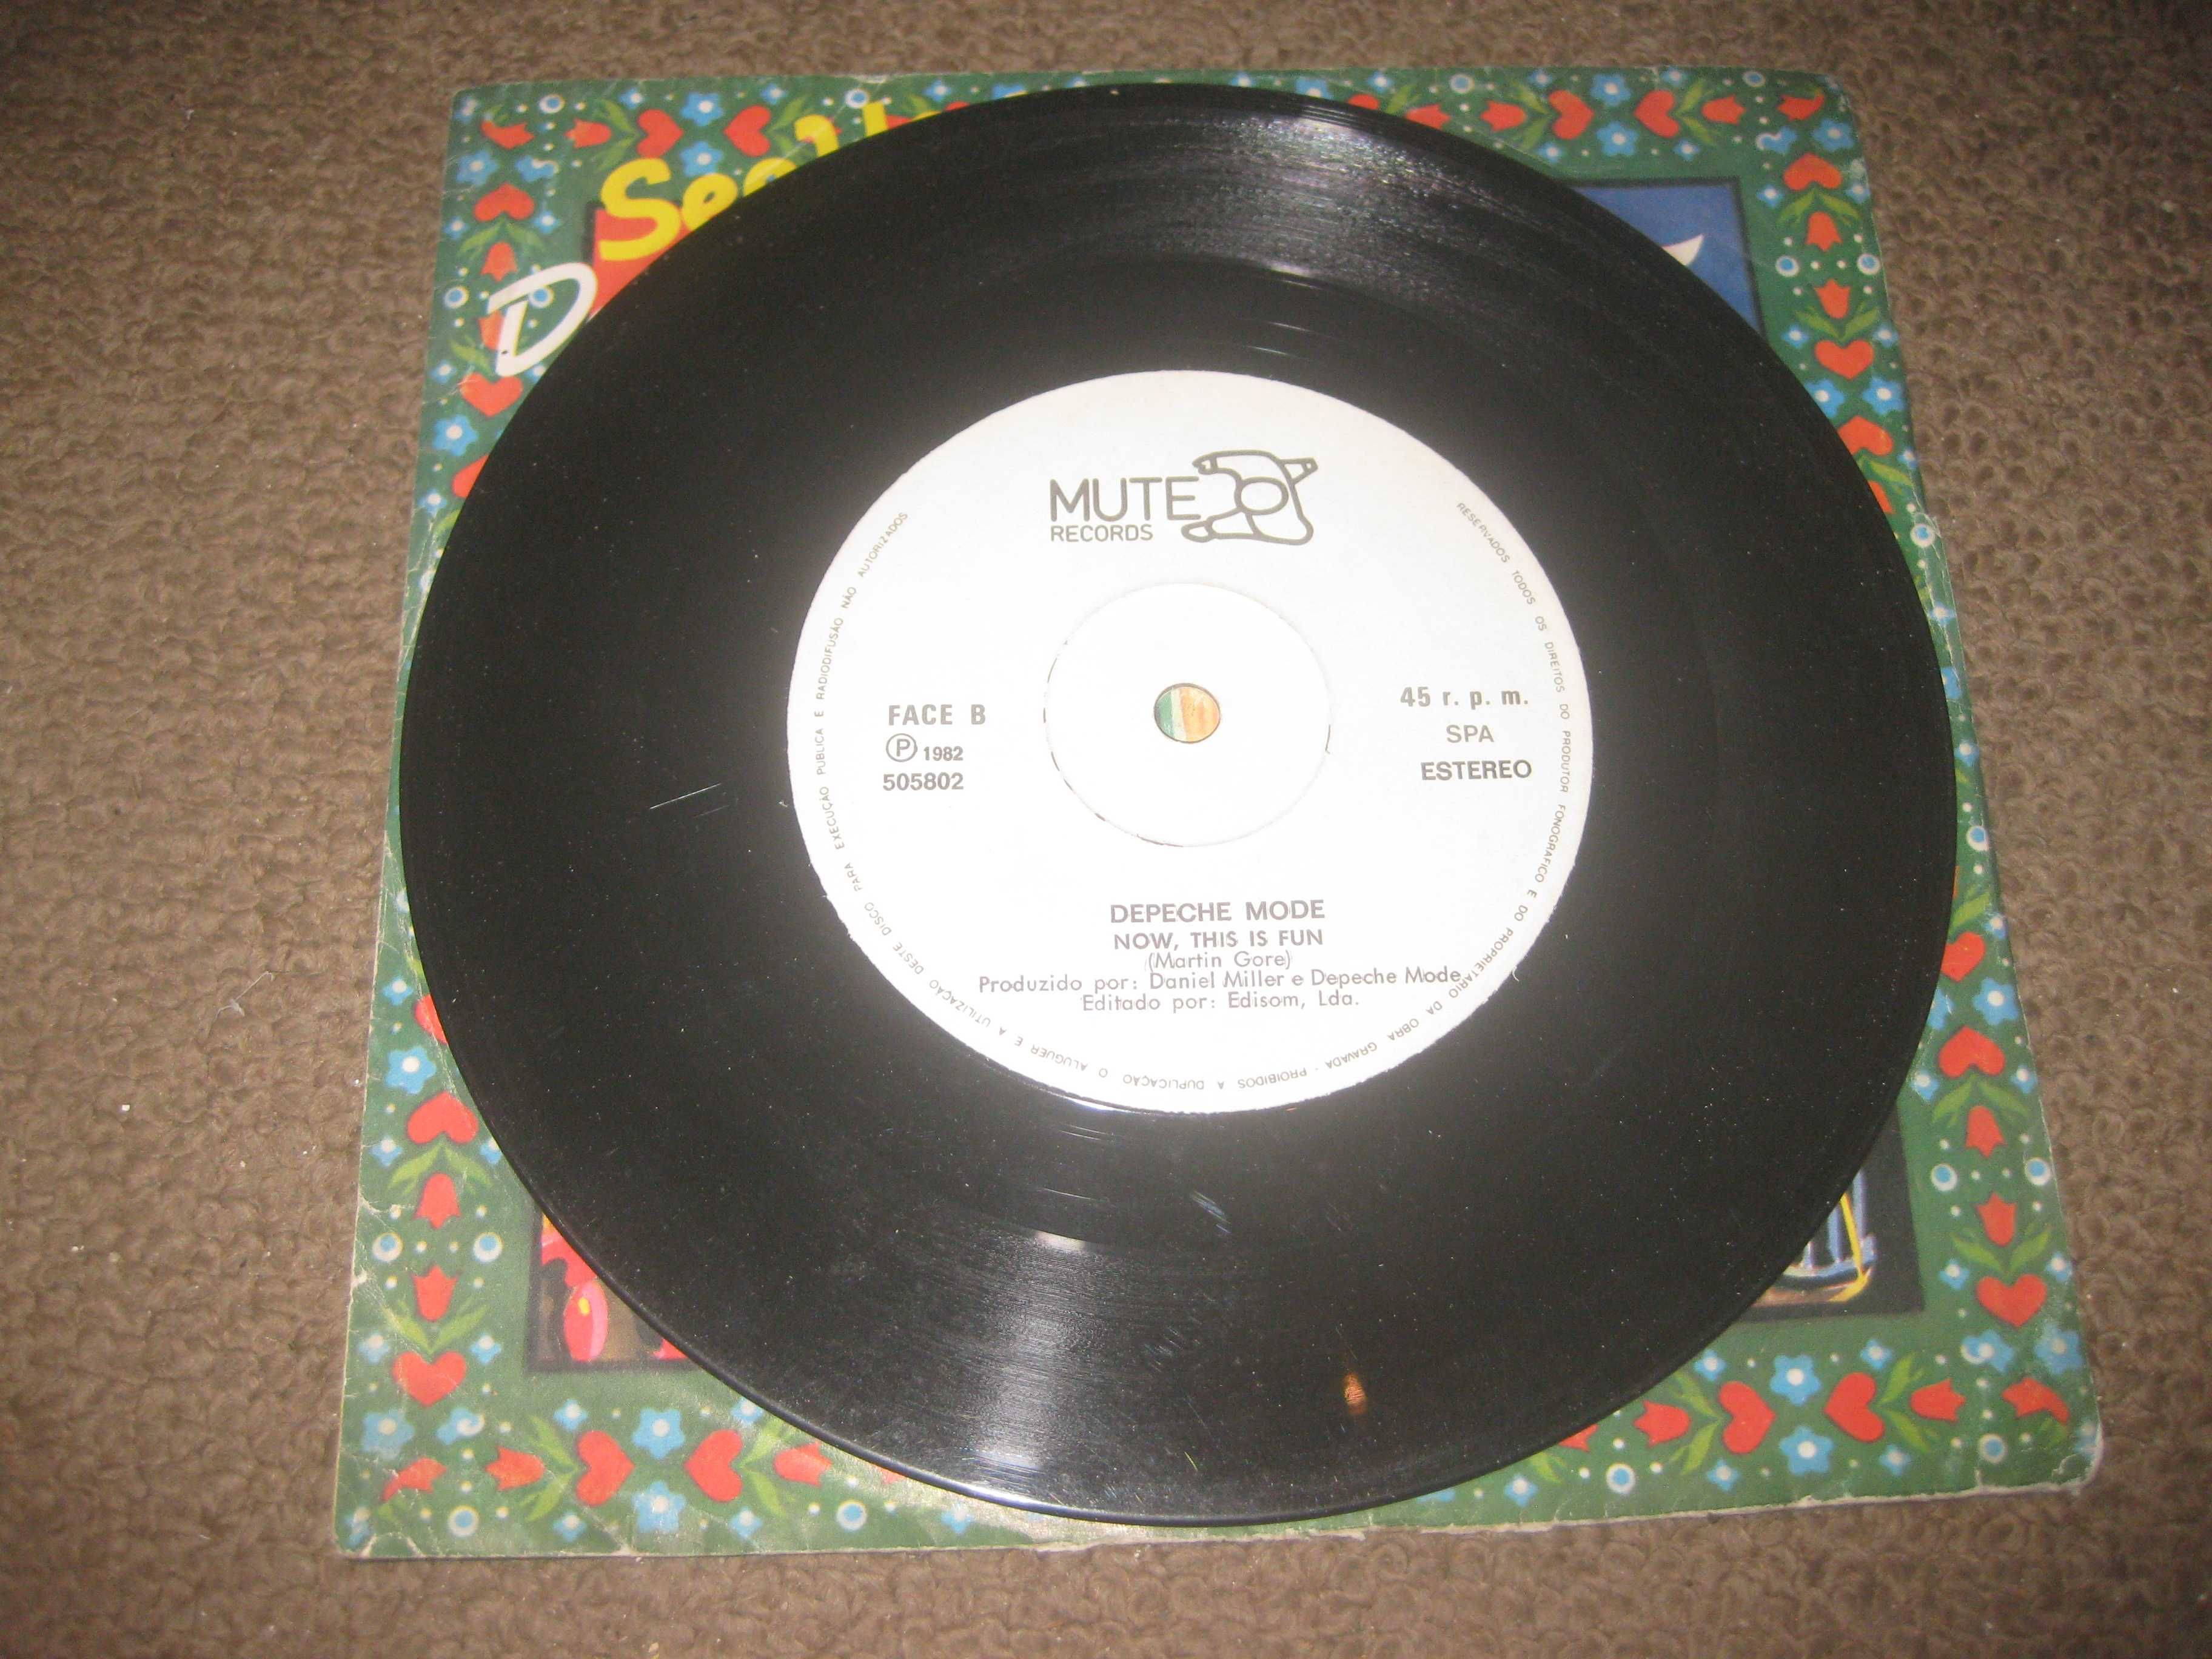 Vinil Single 45 rpm dos Depeche Mode "See You"